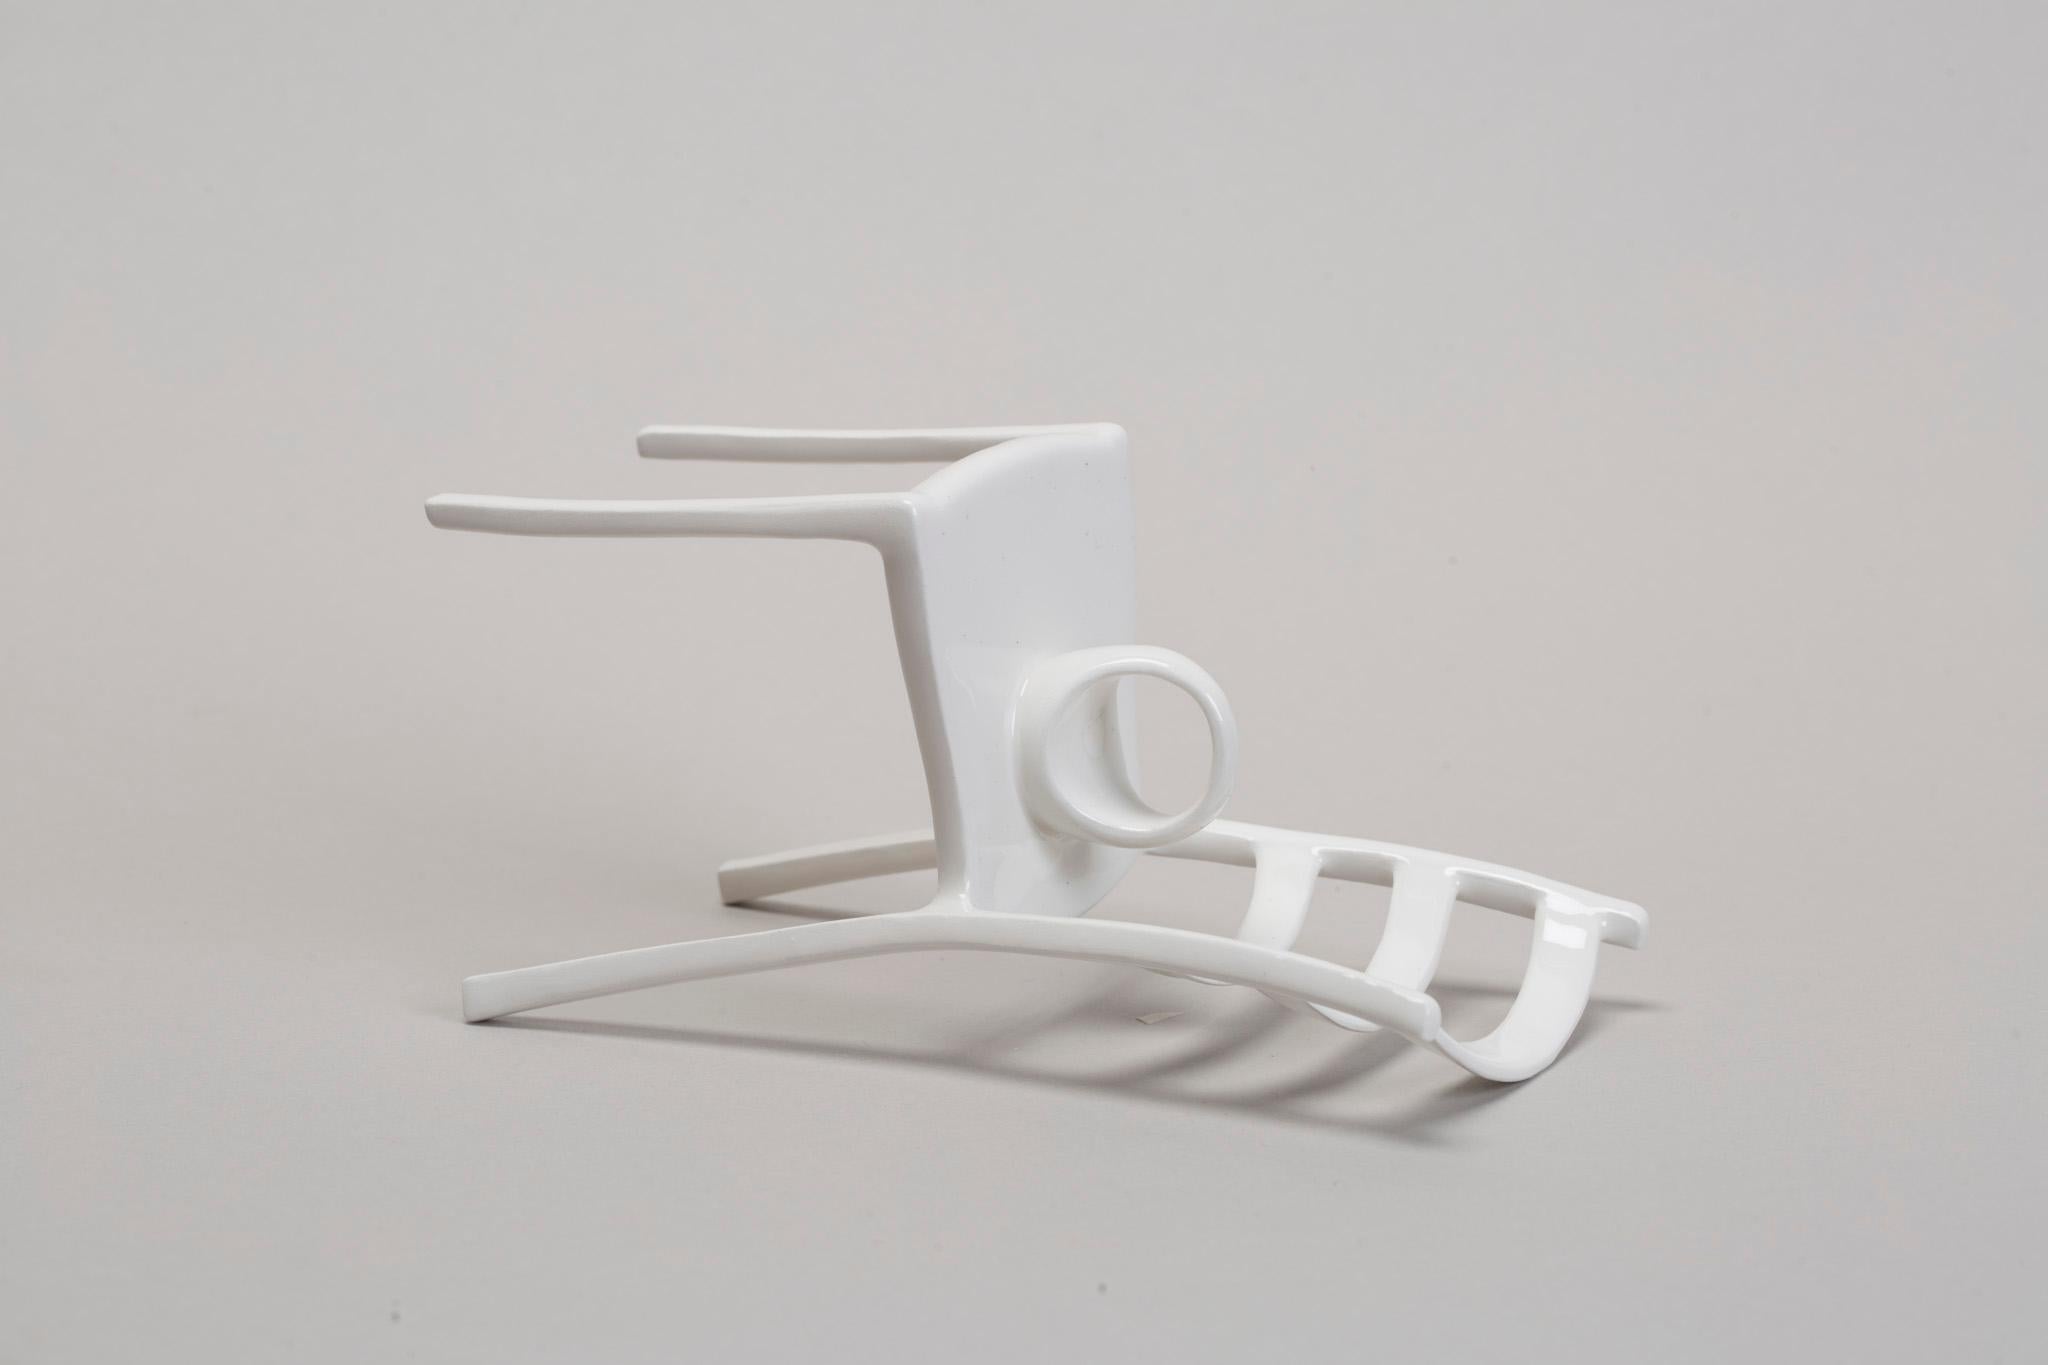 Glazed Ceramic Sculptural Ring by Andrea Salvatori Contemporary 21st Century Art Jewel